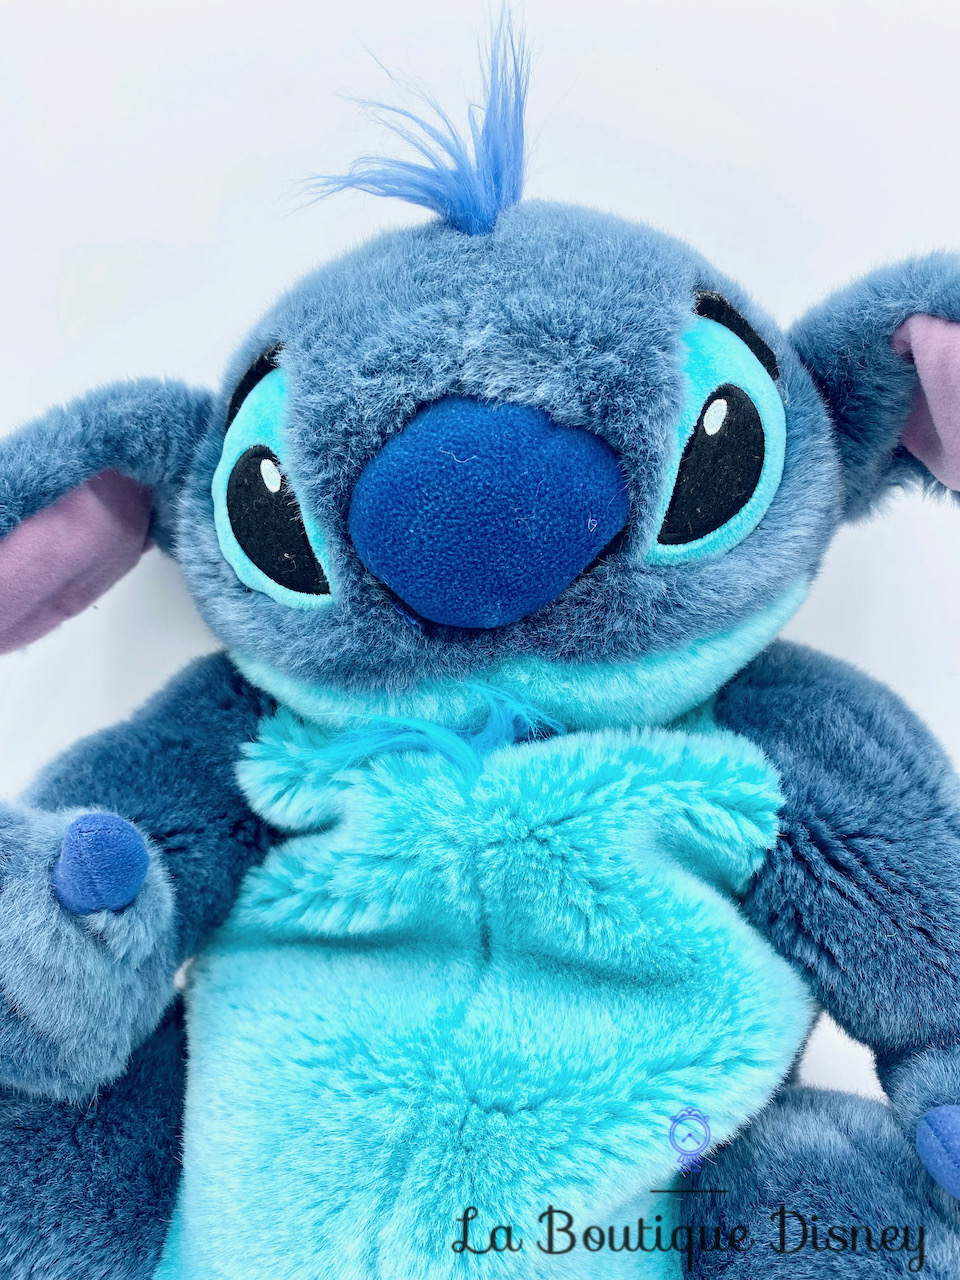 Sac à dos 'Stitch' 'Disney' - bleu - Kiabi - 7.00€